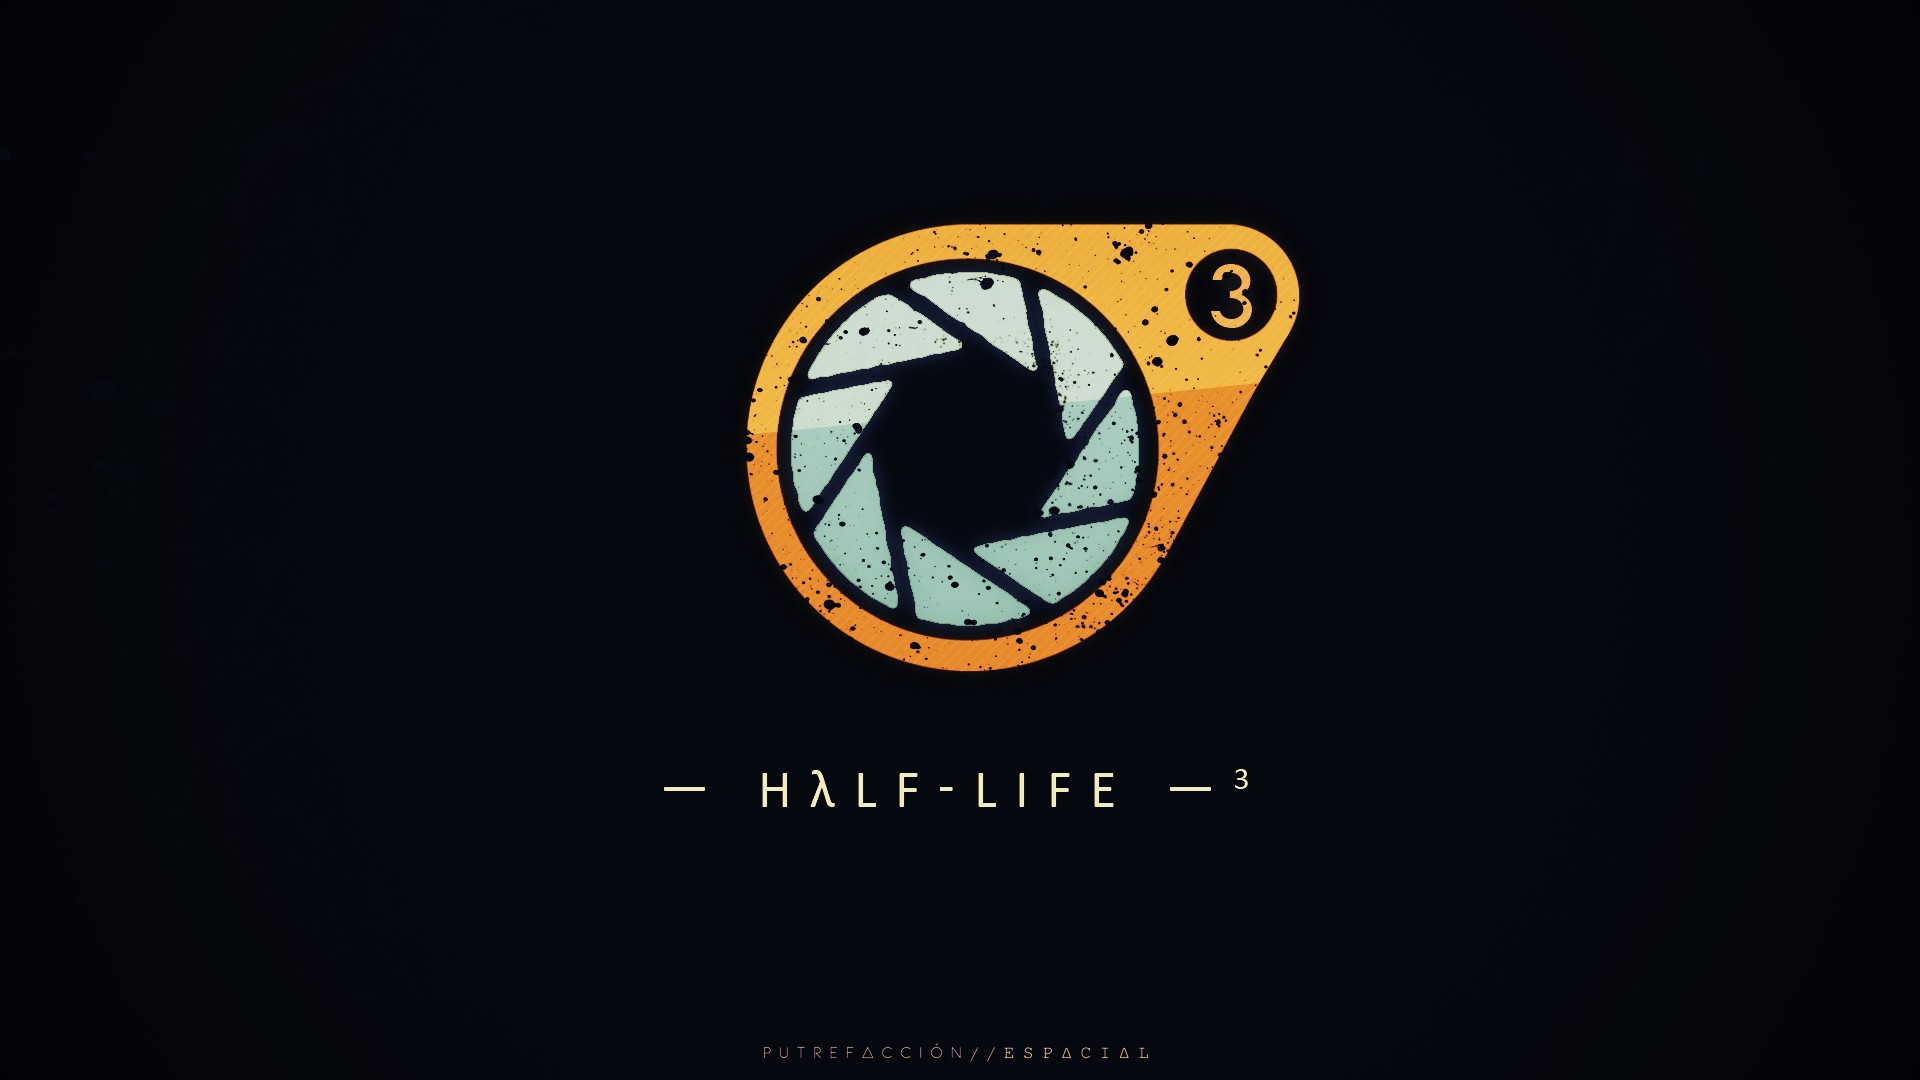 Video Games Half Life Half Life 3 Typography 1920x1080